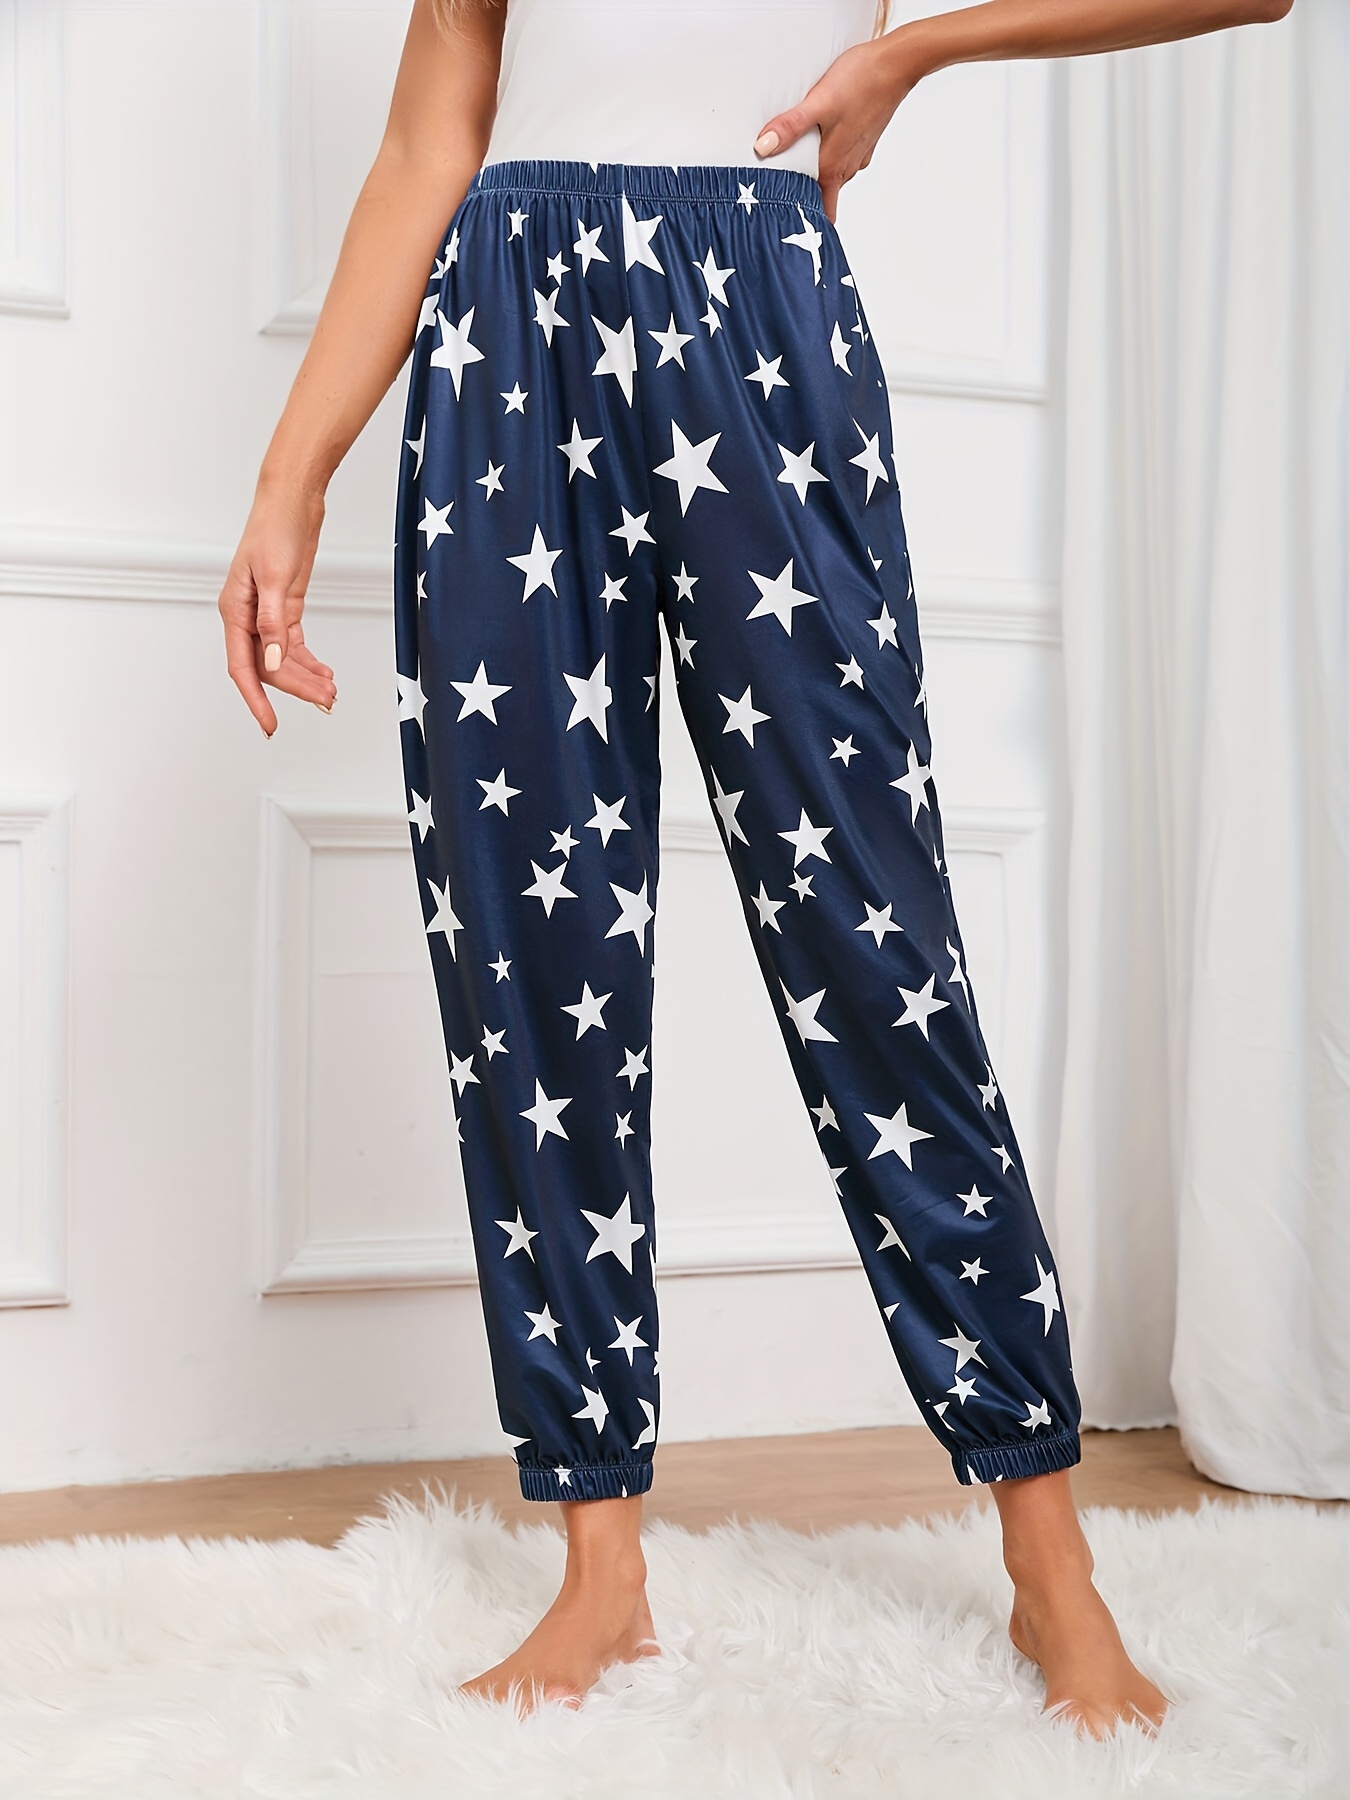 star pattern lounge pants for music festival casual soft elastic waistband pants womens loungewear sleepwear